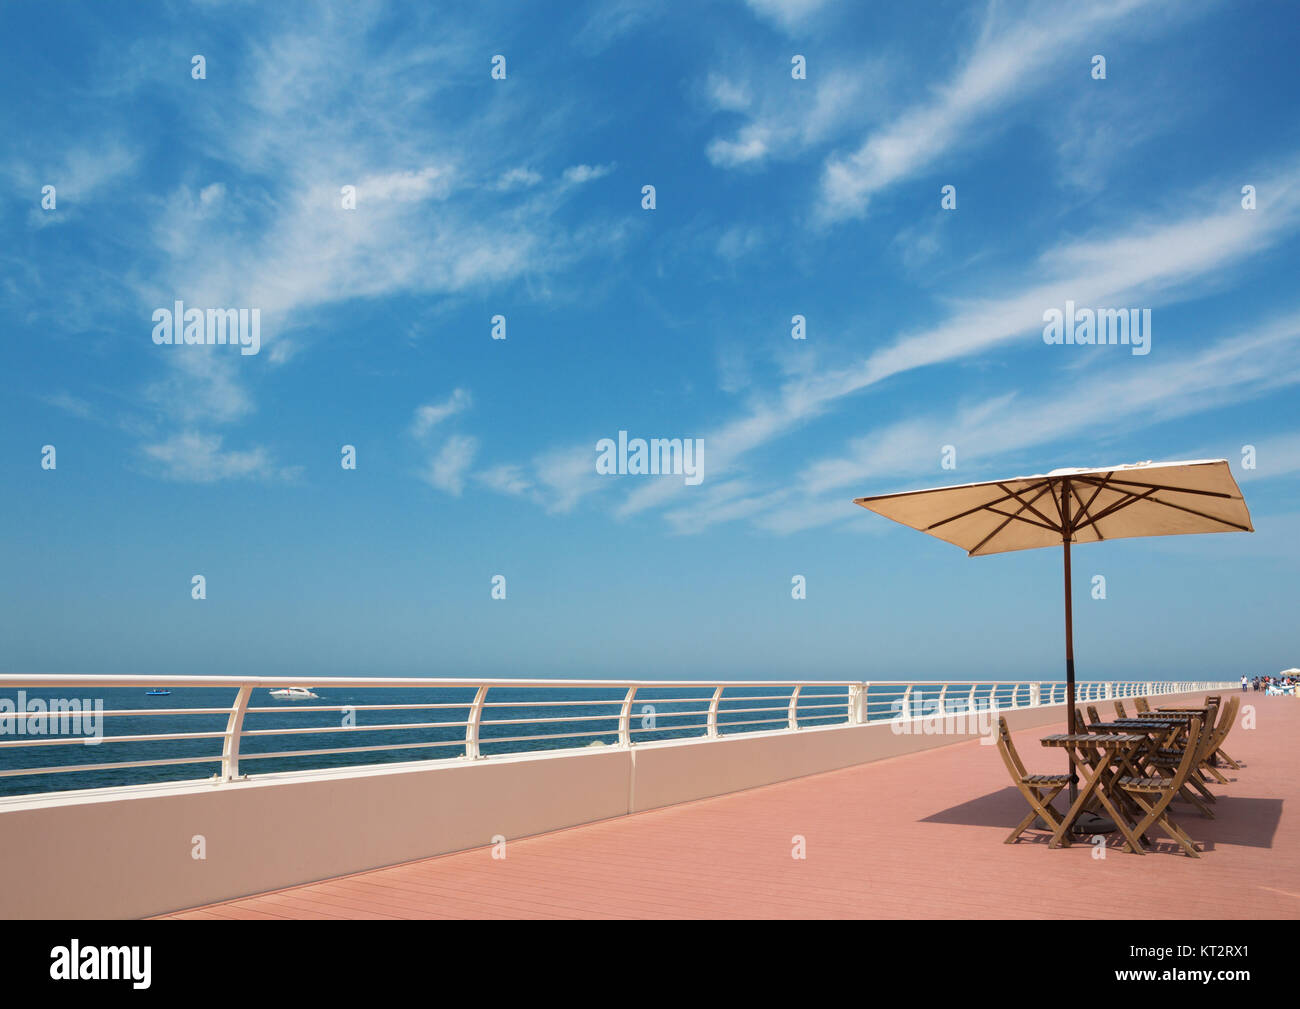 Dubai - The promenade of Palm Island. Stock Photo